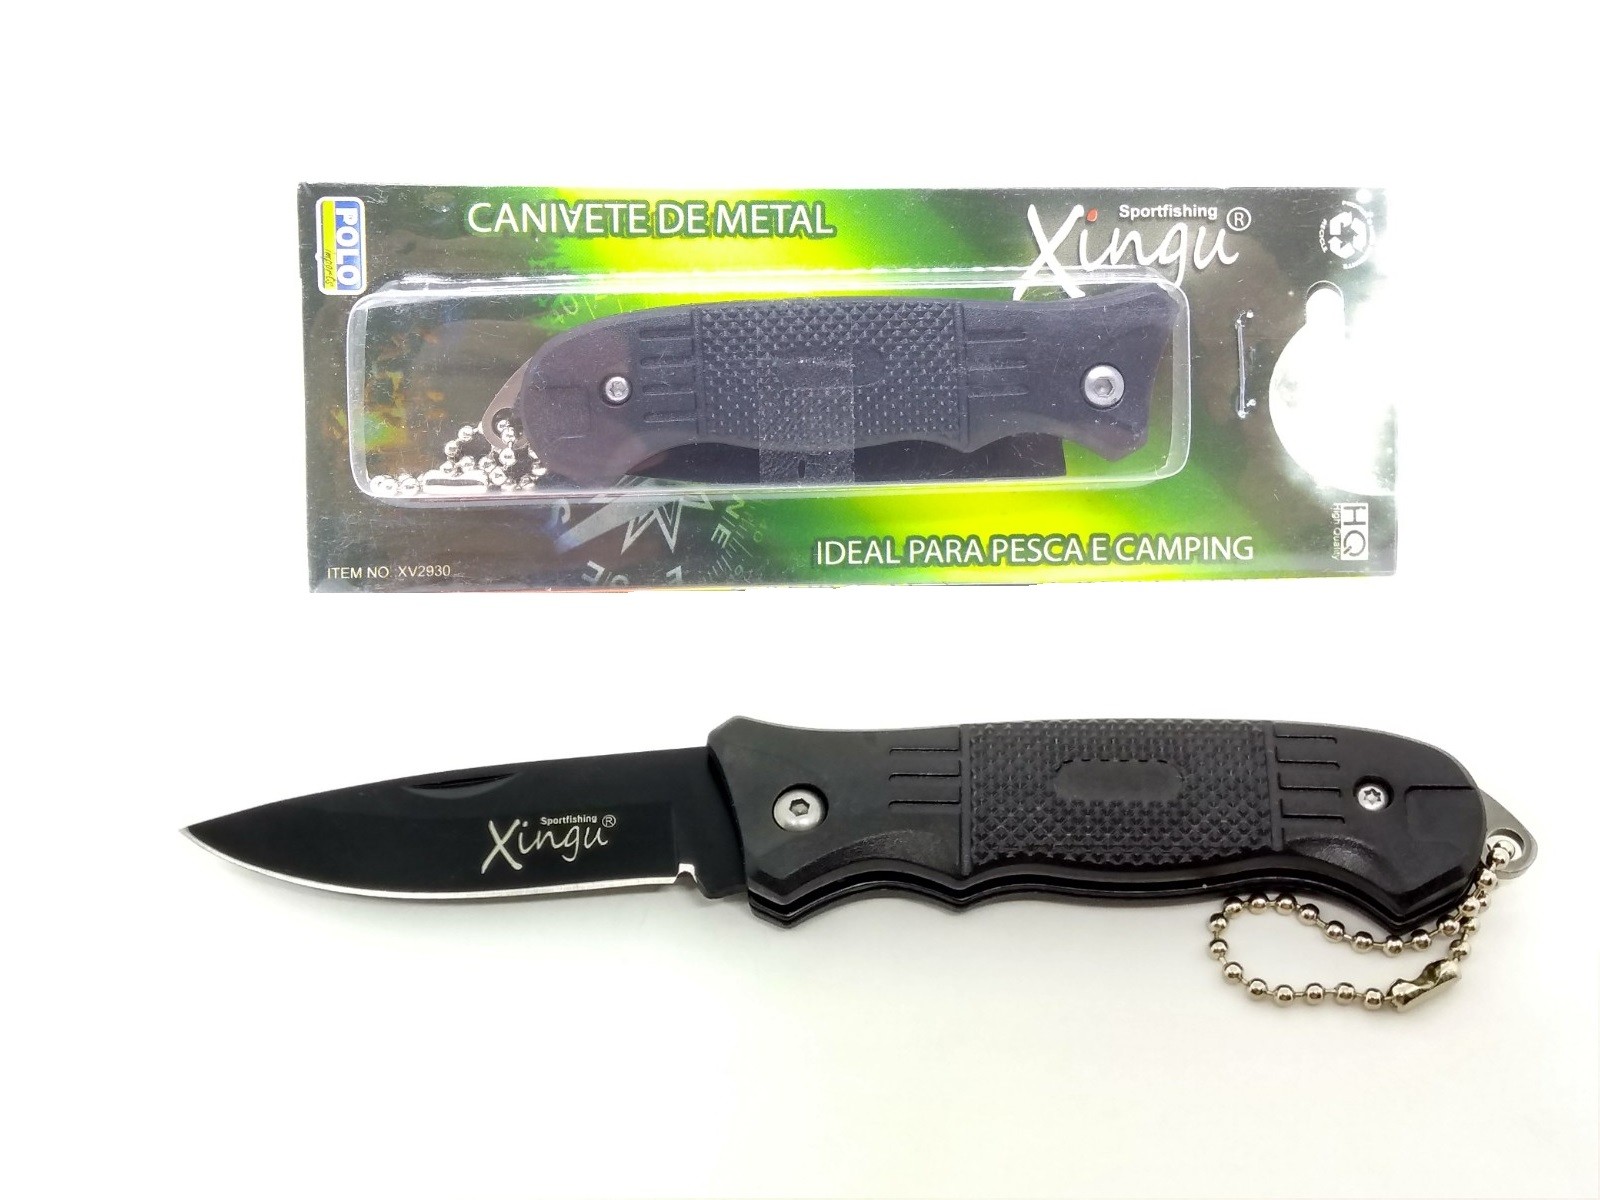 Canivete Xingu XV2930 - Cabo Preto - Life Pesca - Sua loja de Pesca, Camping e Lazer